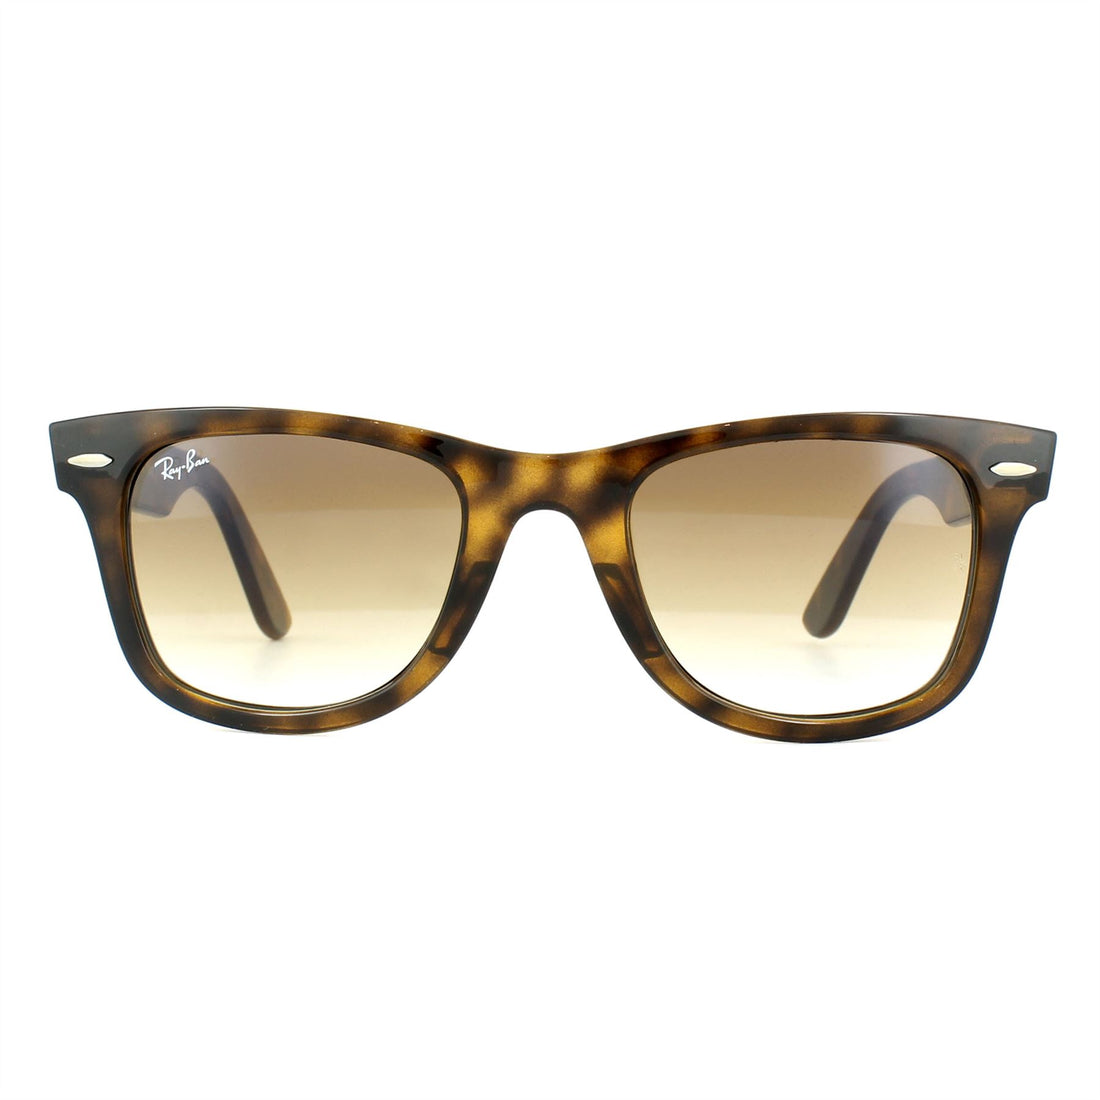 Ray-Ban Sunglasses Wayfarer Ease RB4340 710/51 Tortoise Light Brown Gradient